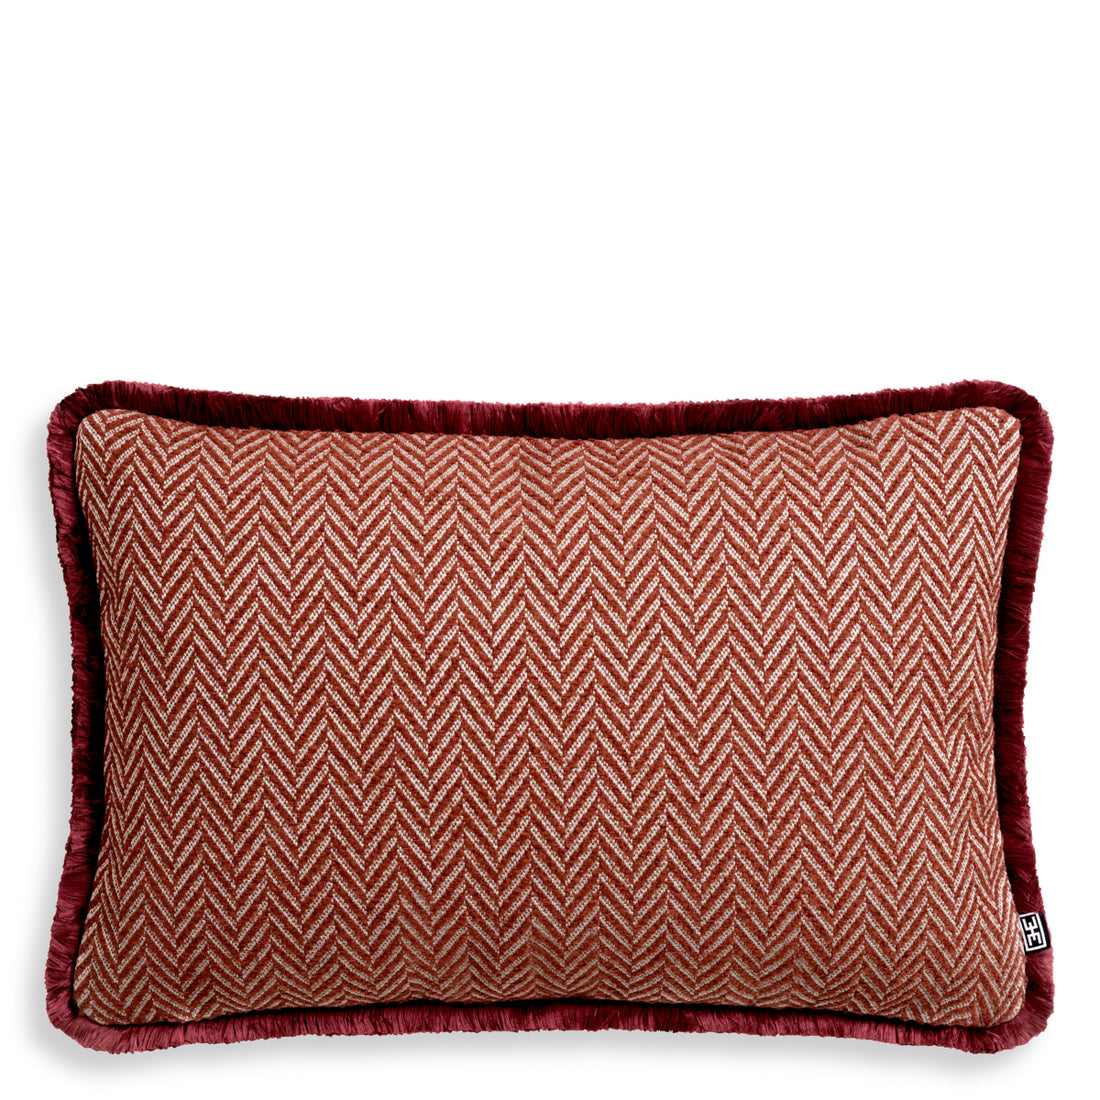 Cushion Kauai rectangular red